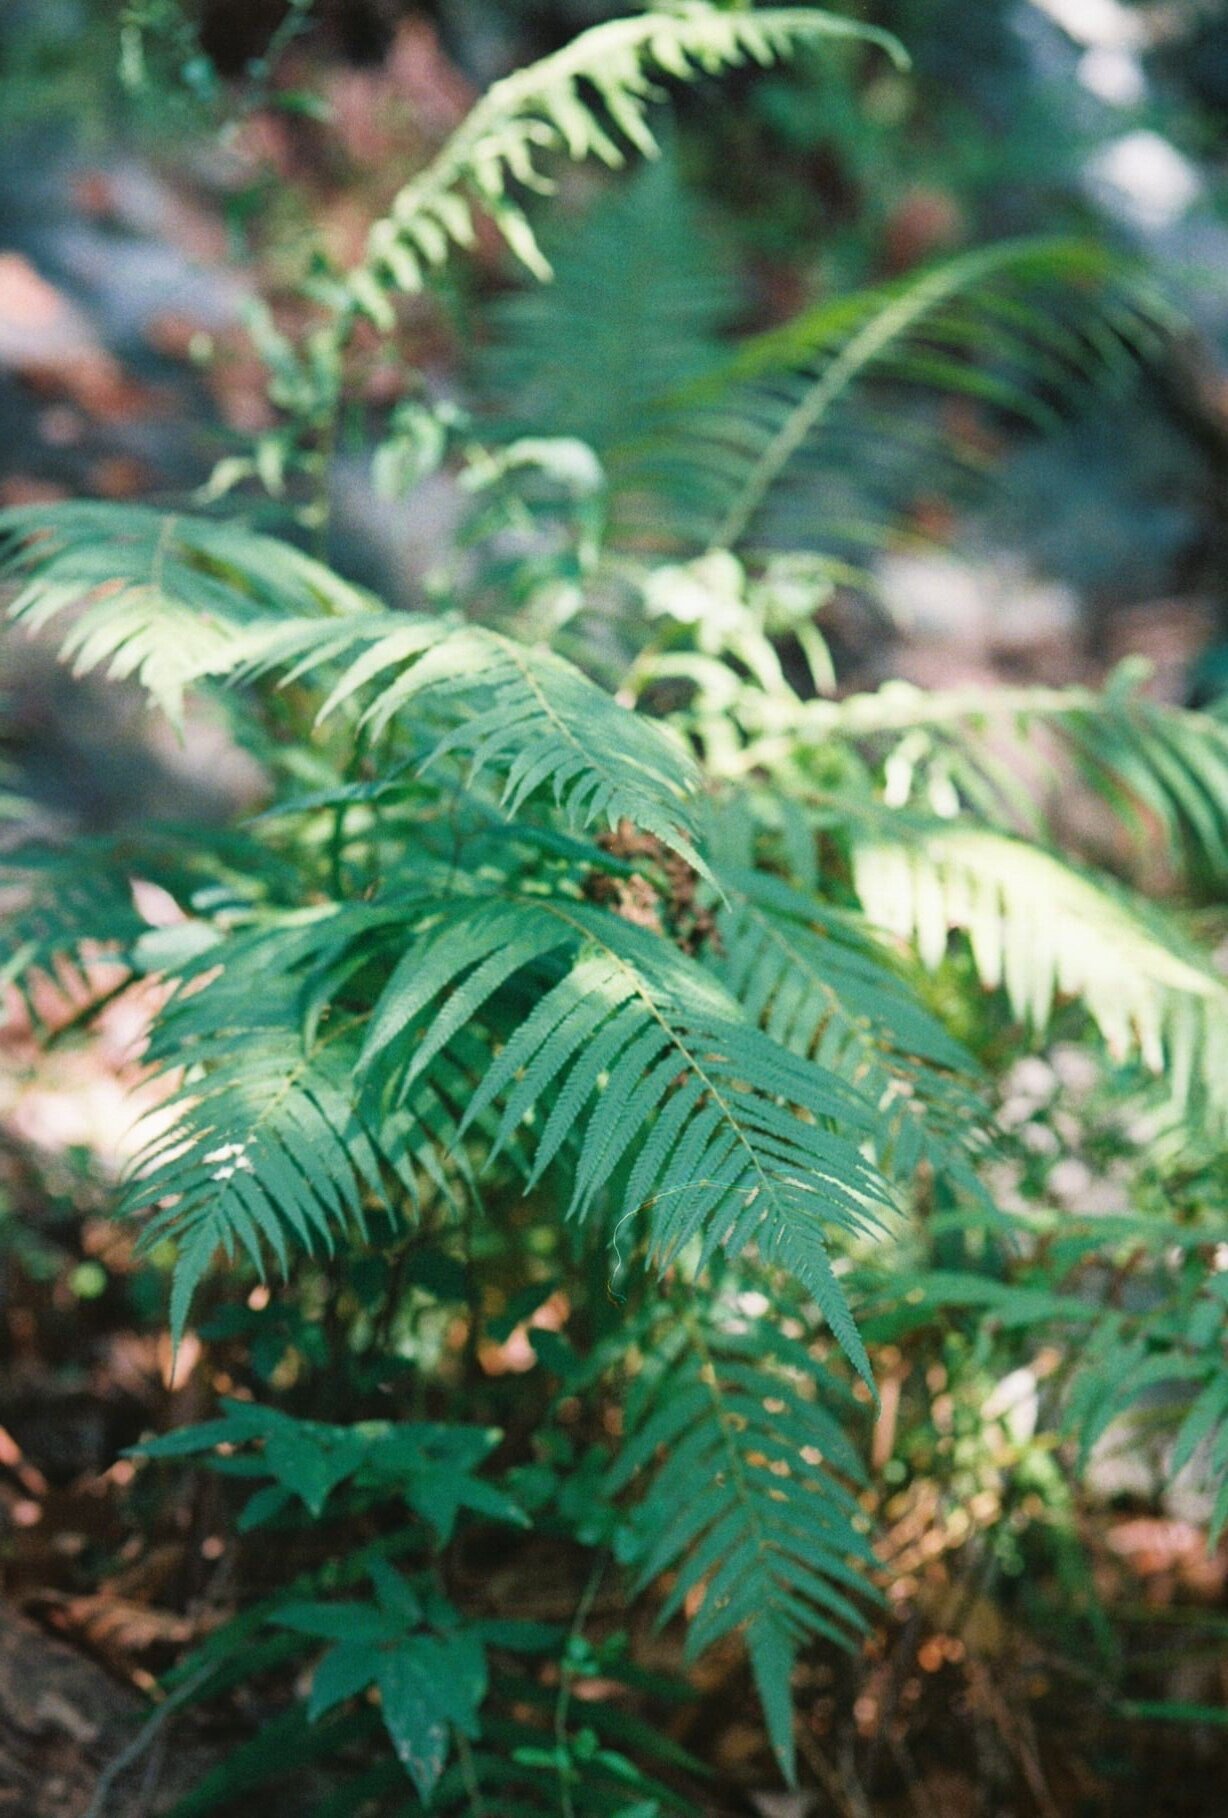   Thelypteris ovata lindheimeri ~  Lindheimer shield fern  